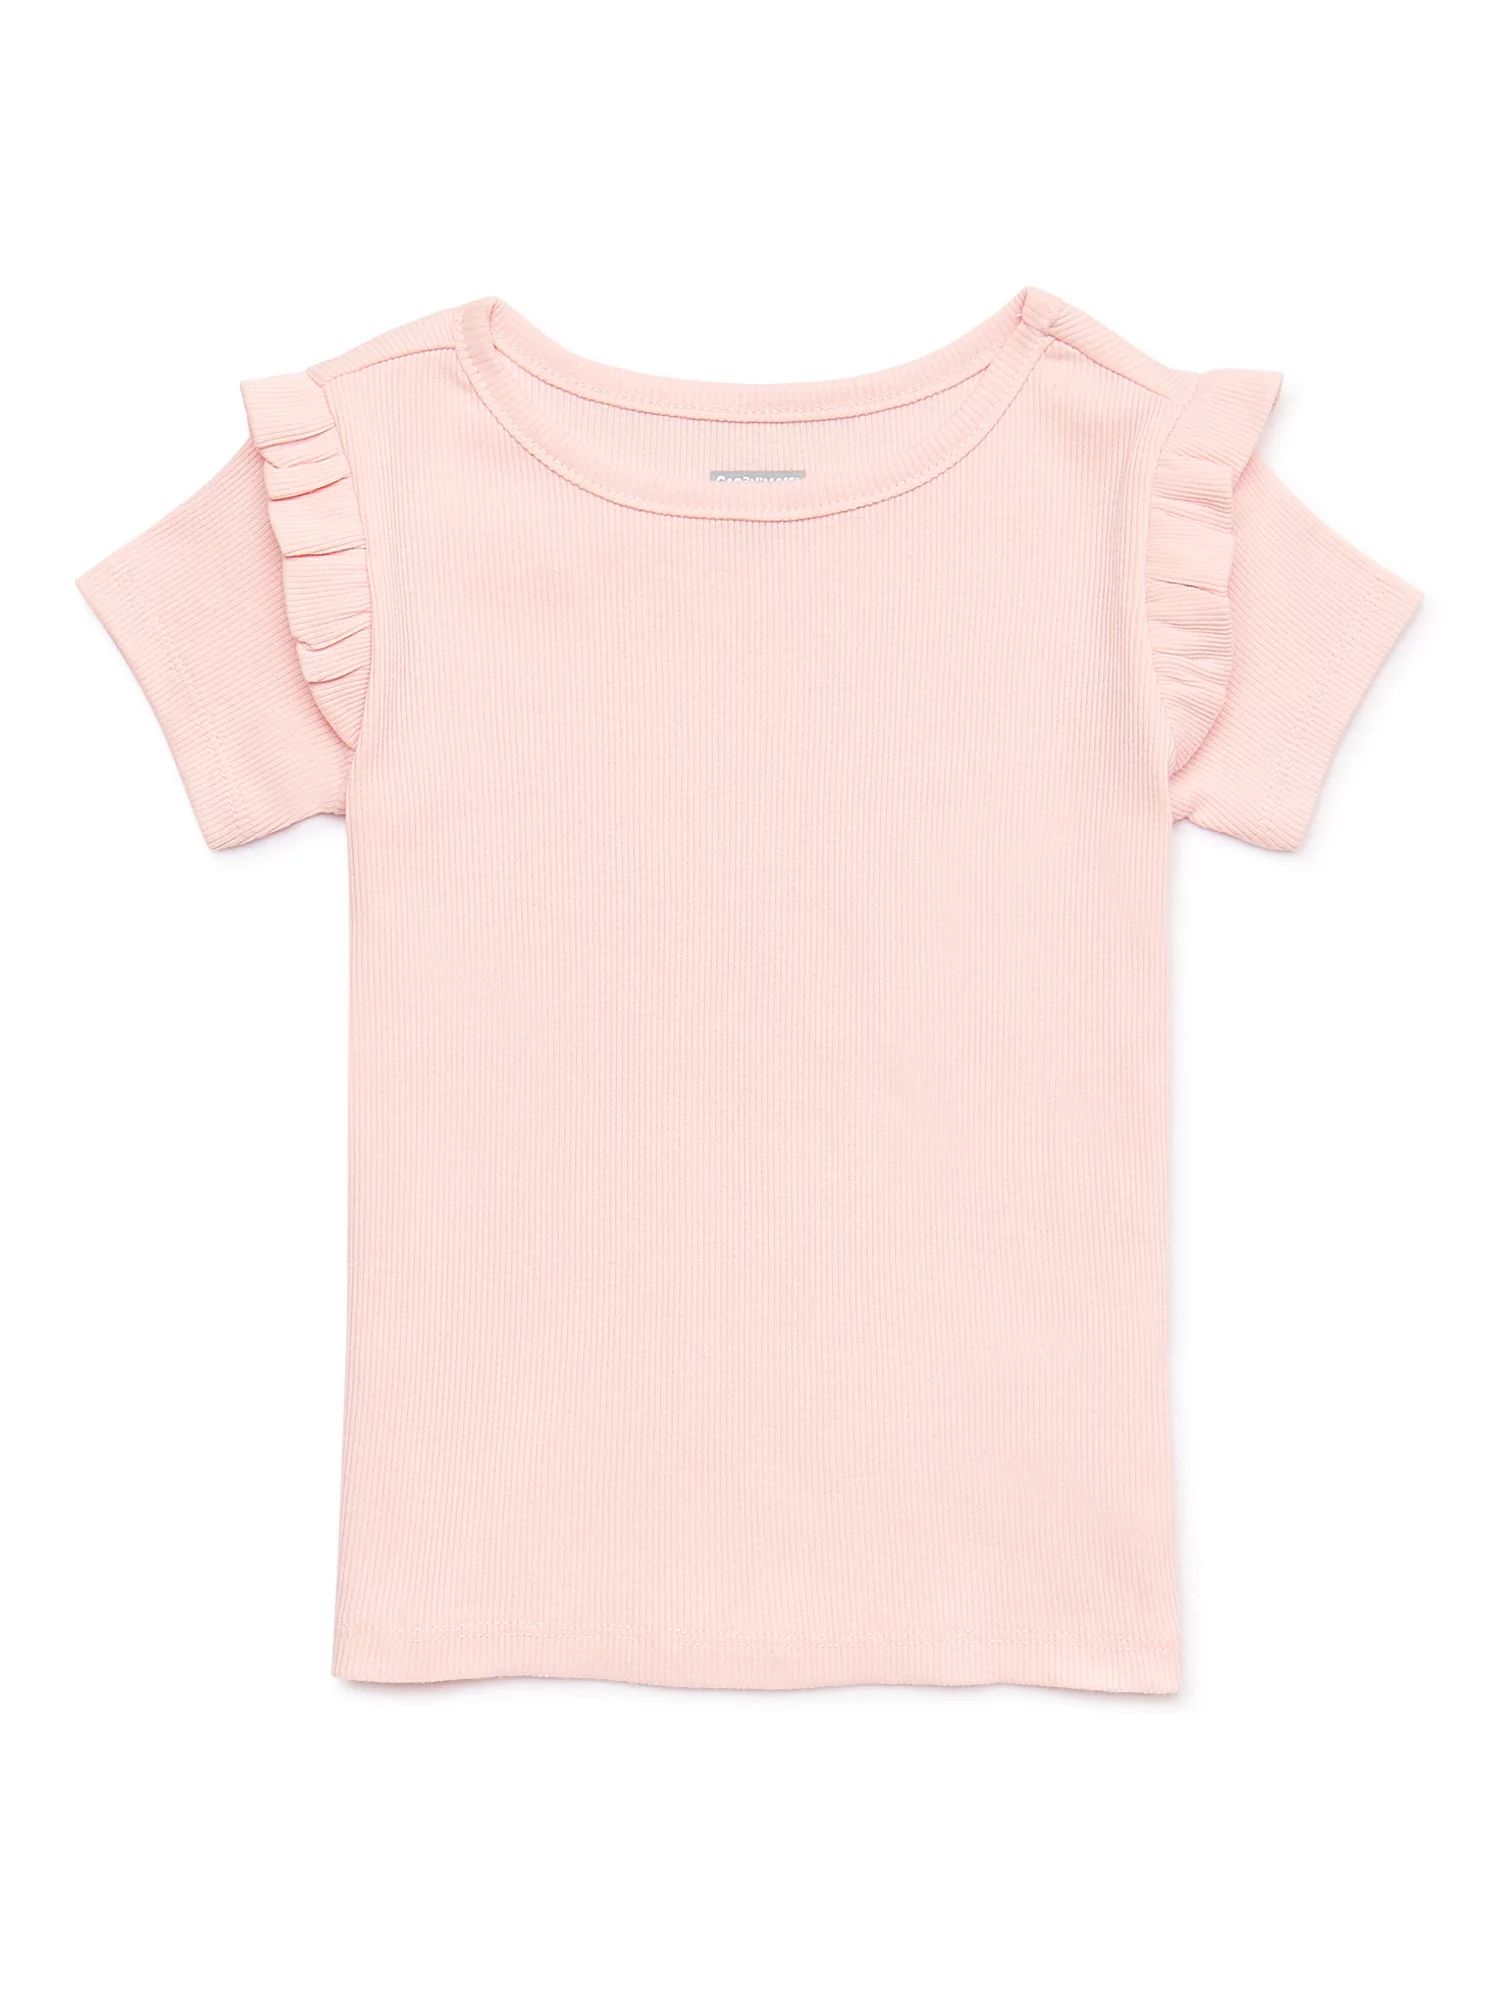 Garanimals Toddler Girls Short Sleeve Rib Top, Sizes 12 Months - 5T | Walmart (US)